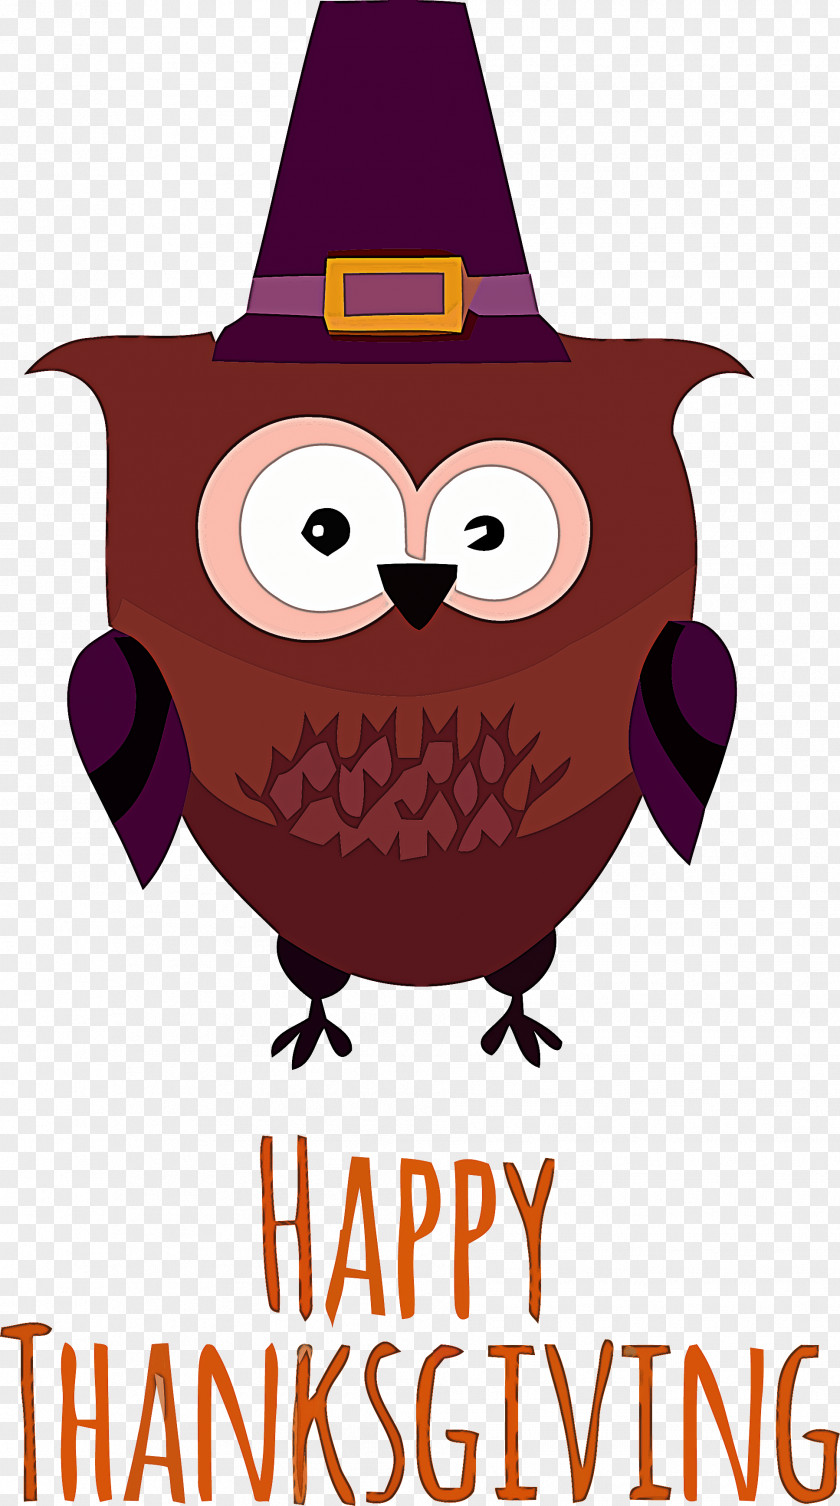 Owl Cartoon Bird Of Prey Eastern Screech PNG